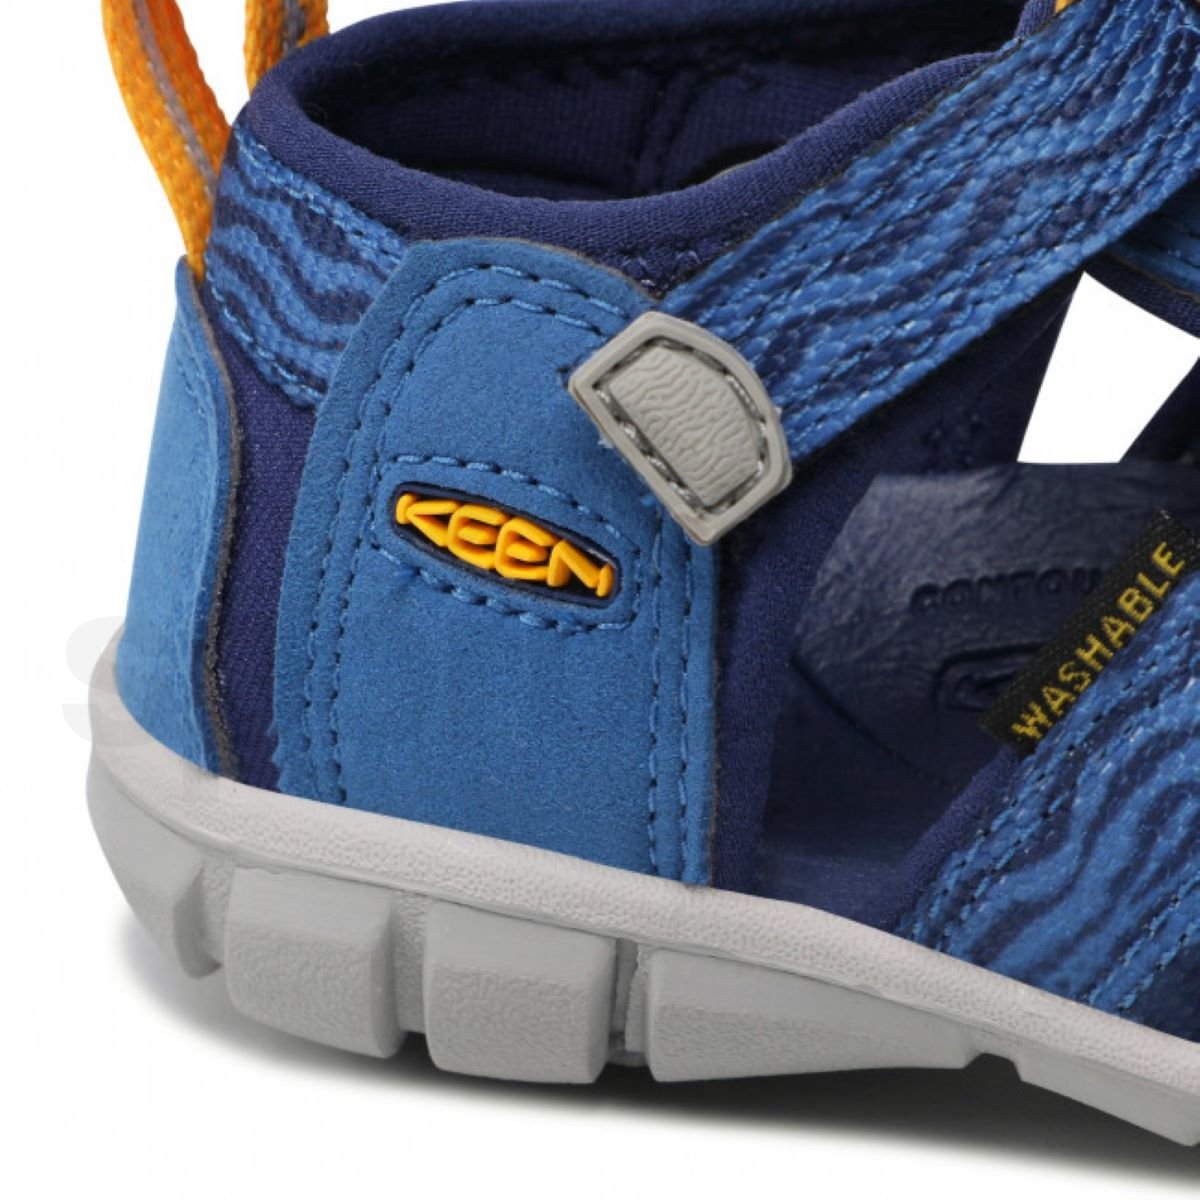 Obuv - sandály Keen Seacamp II CNX J - modrá/oranžová